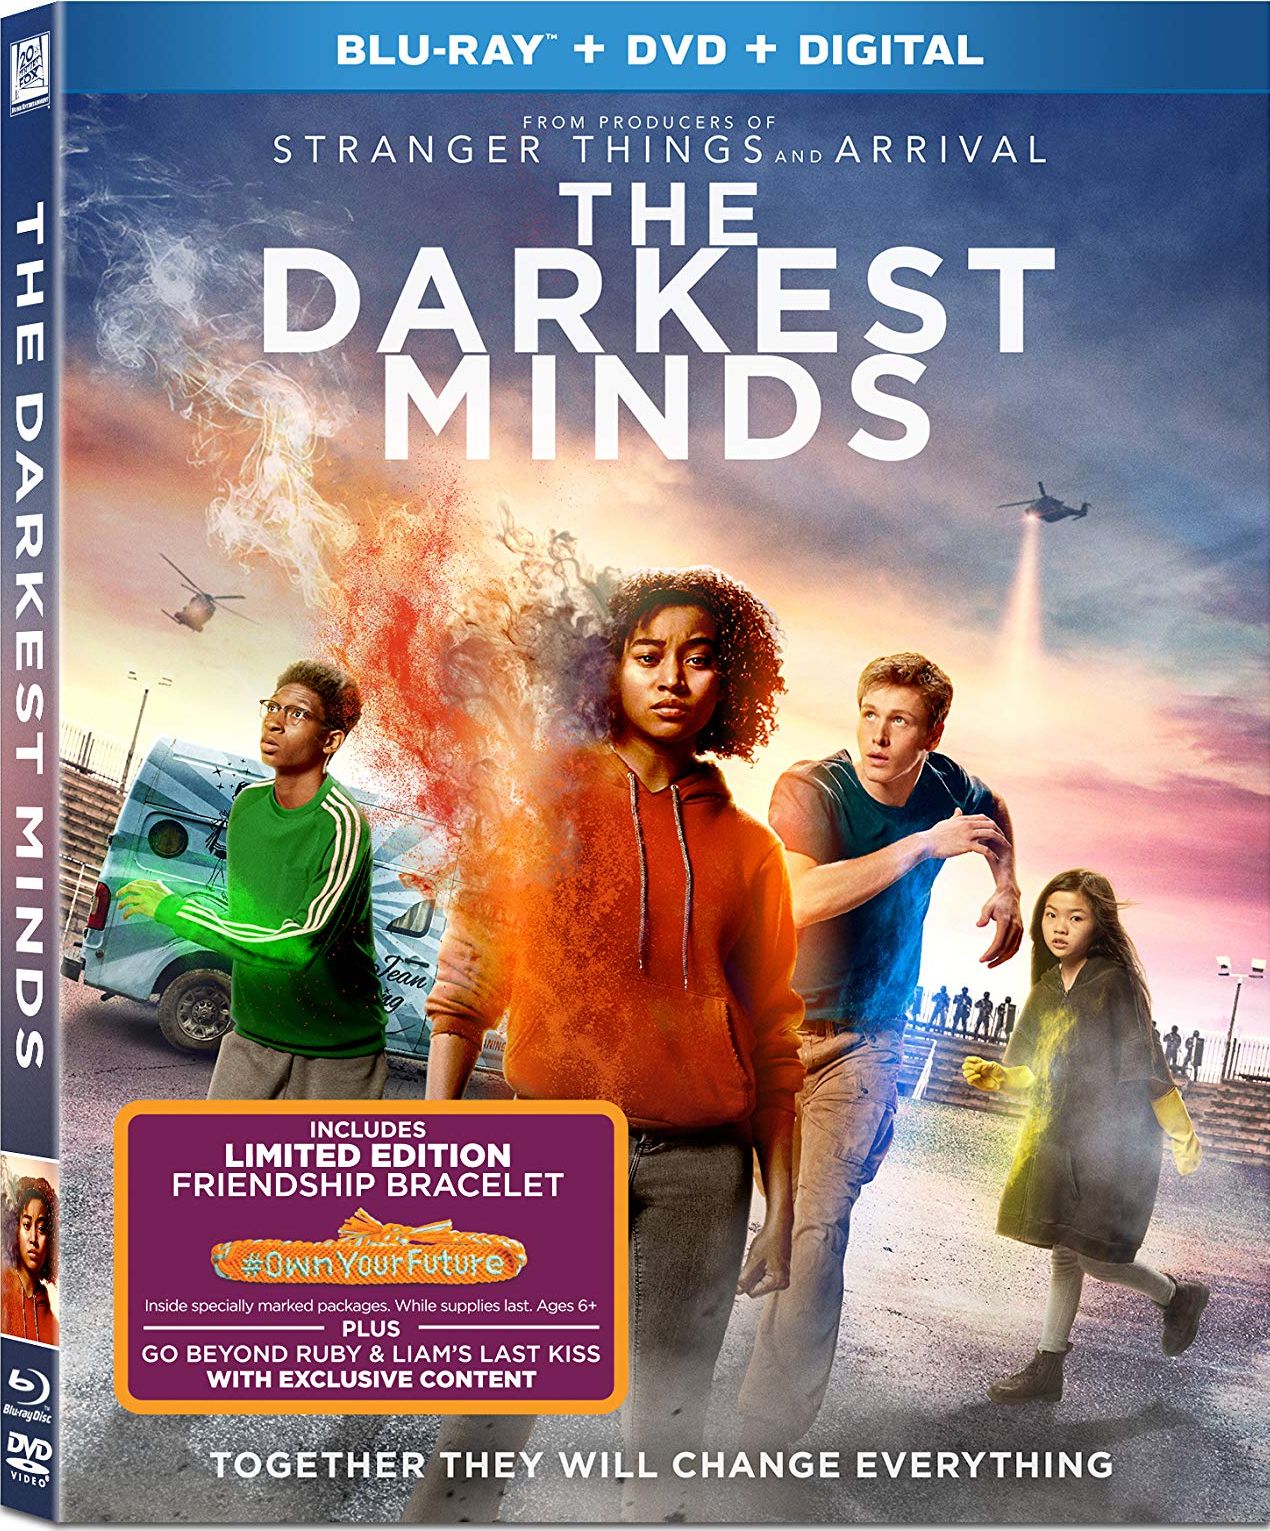 The Darkest Minds DVD Release Date October 30, 2018